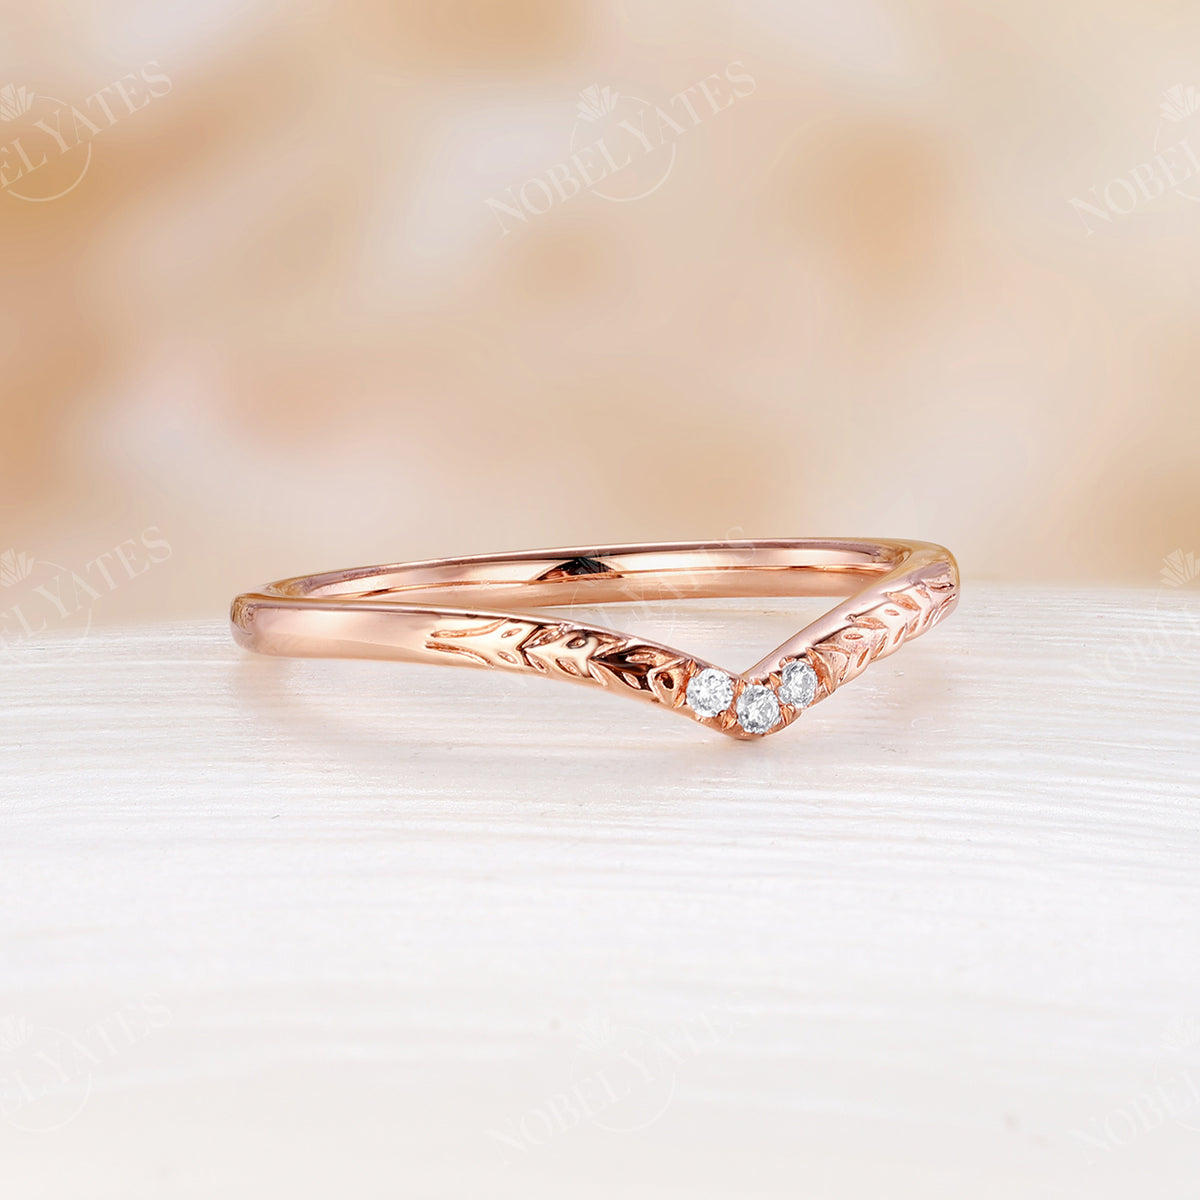 Cueved Leaf Engrave Rose Gold Matching Stacking Diamond Wedding Band